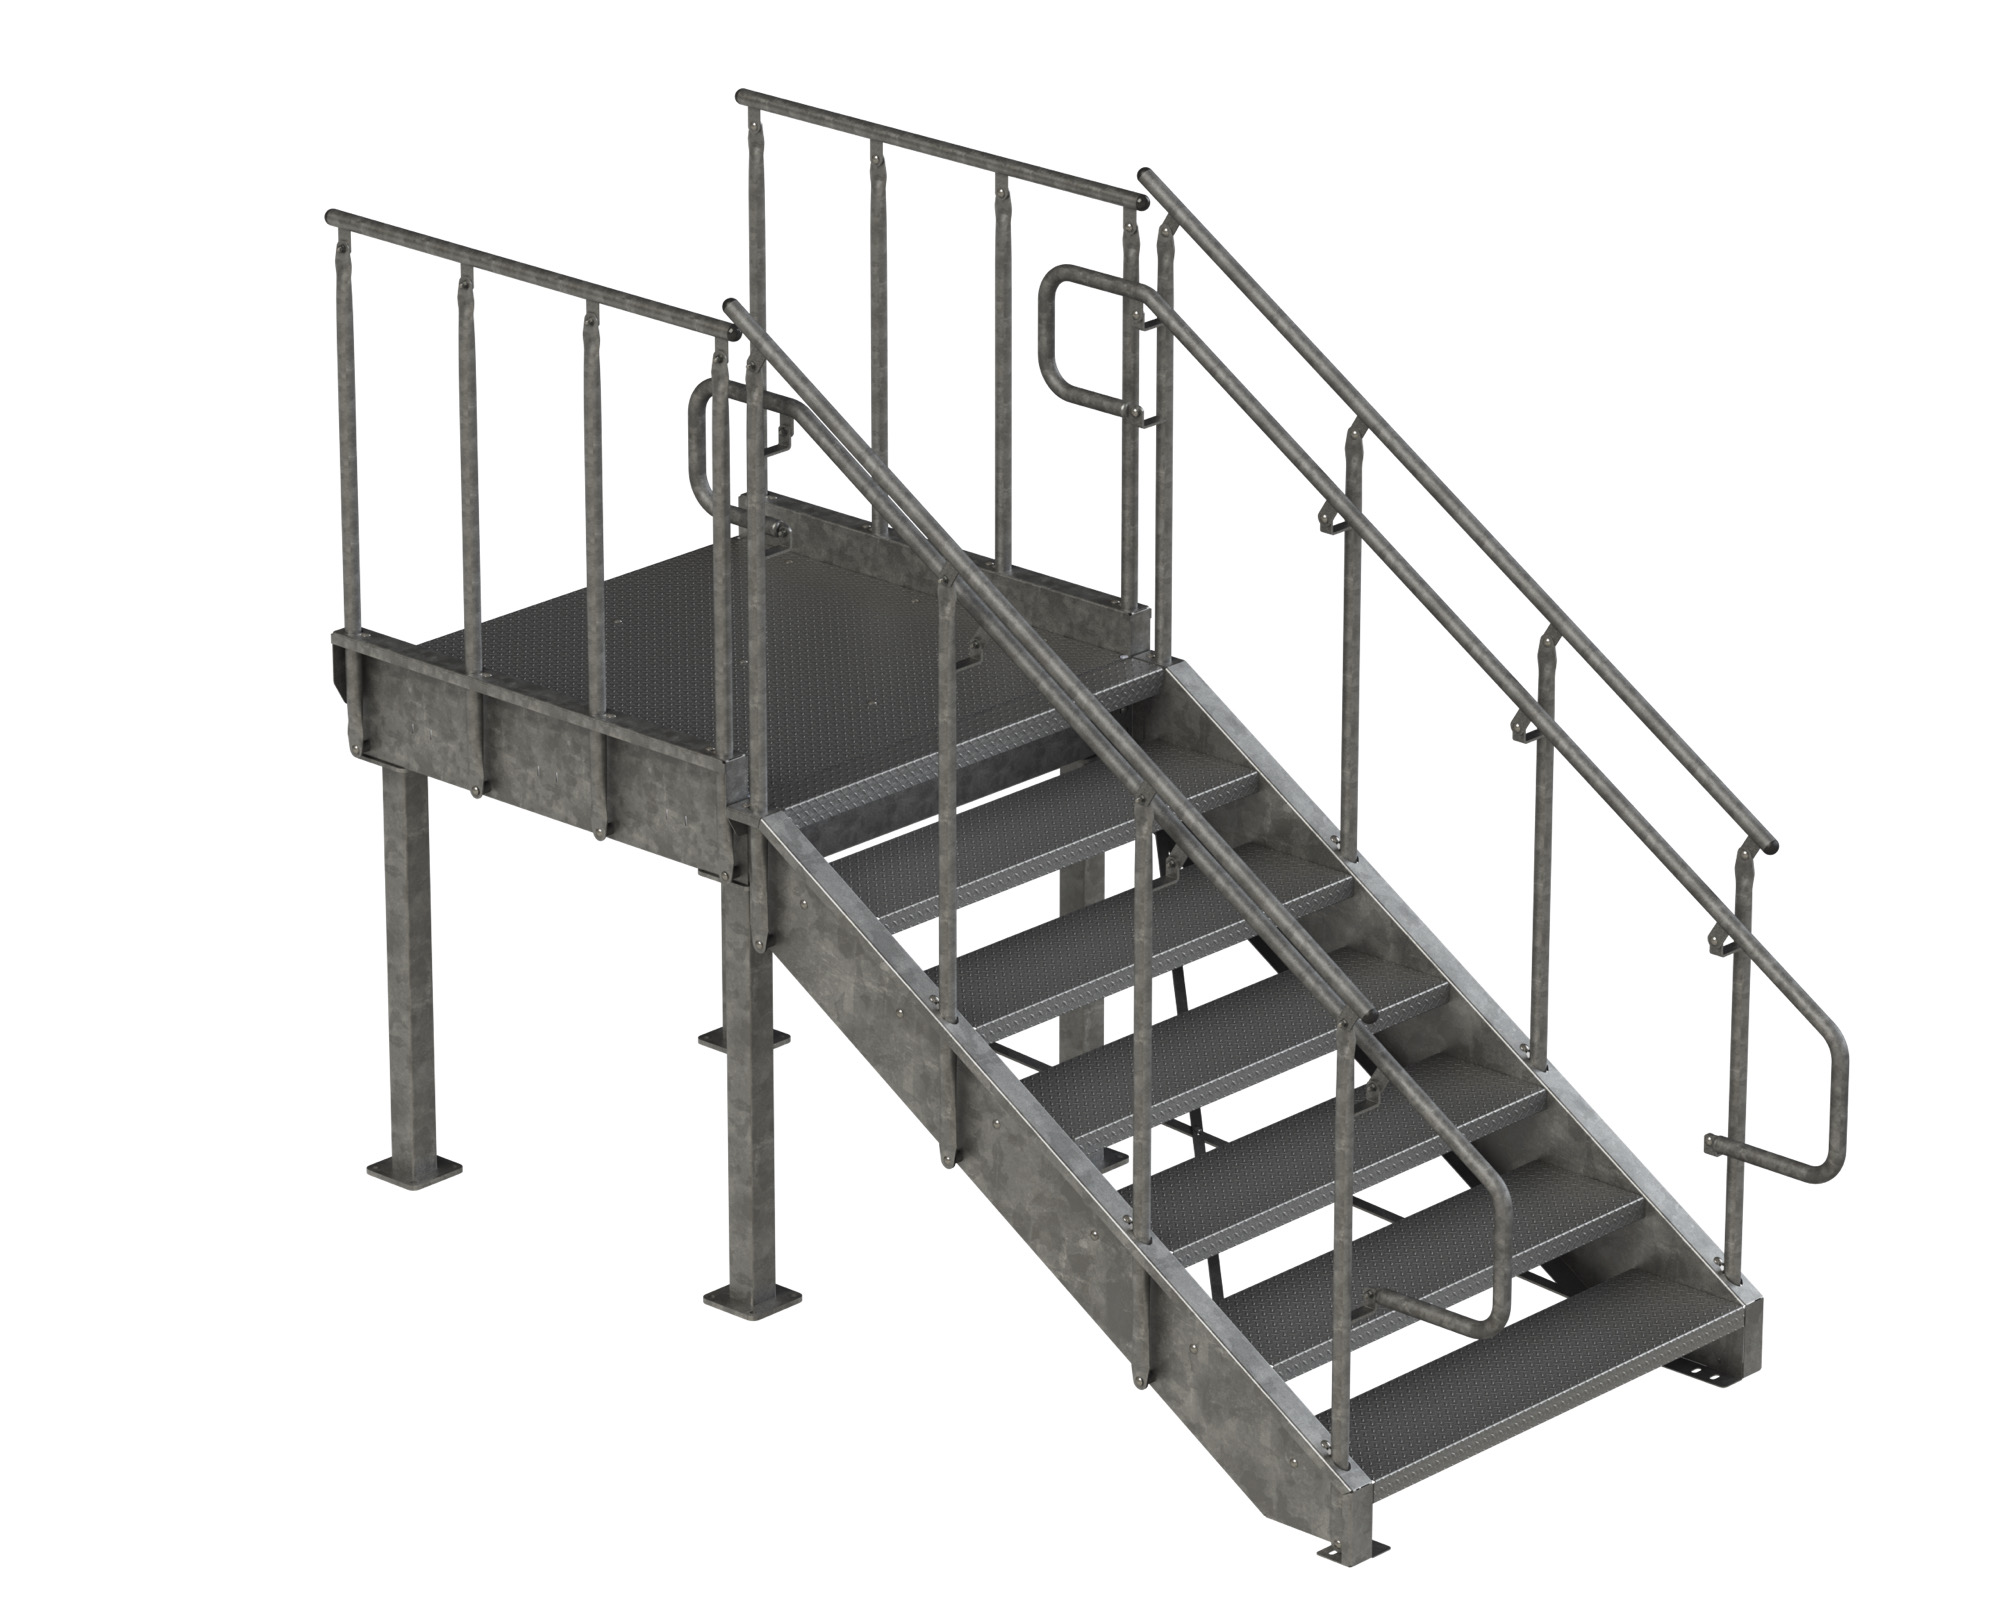 Loading Dock Stairs, Steel, Galvanized, Diamond Plate, IBC-Industrial, Standard